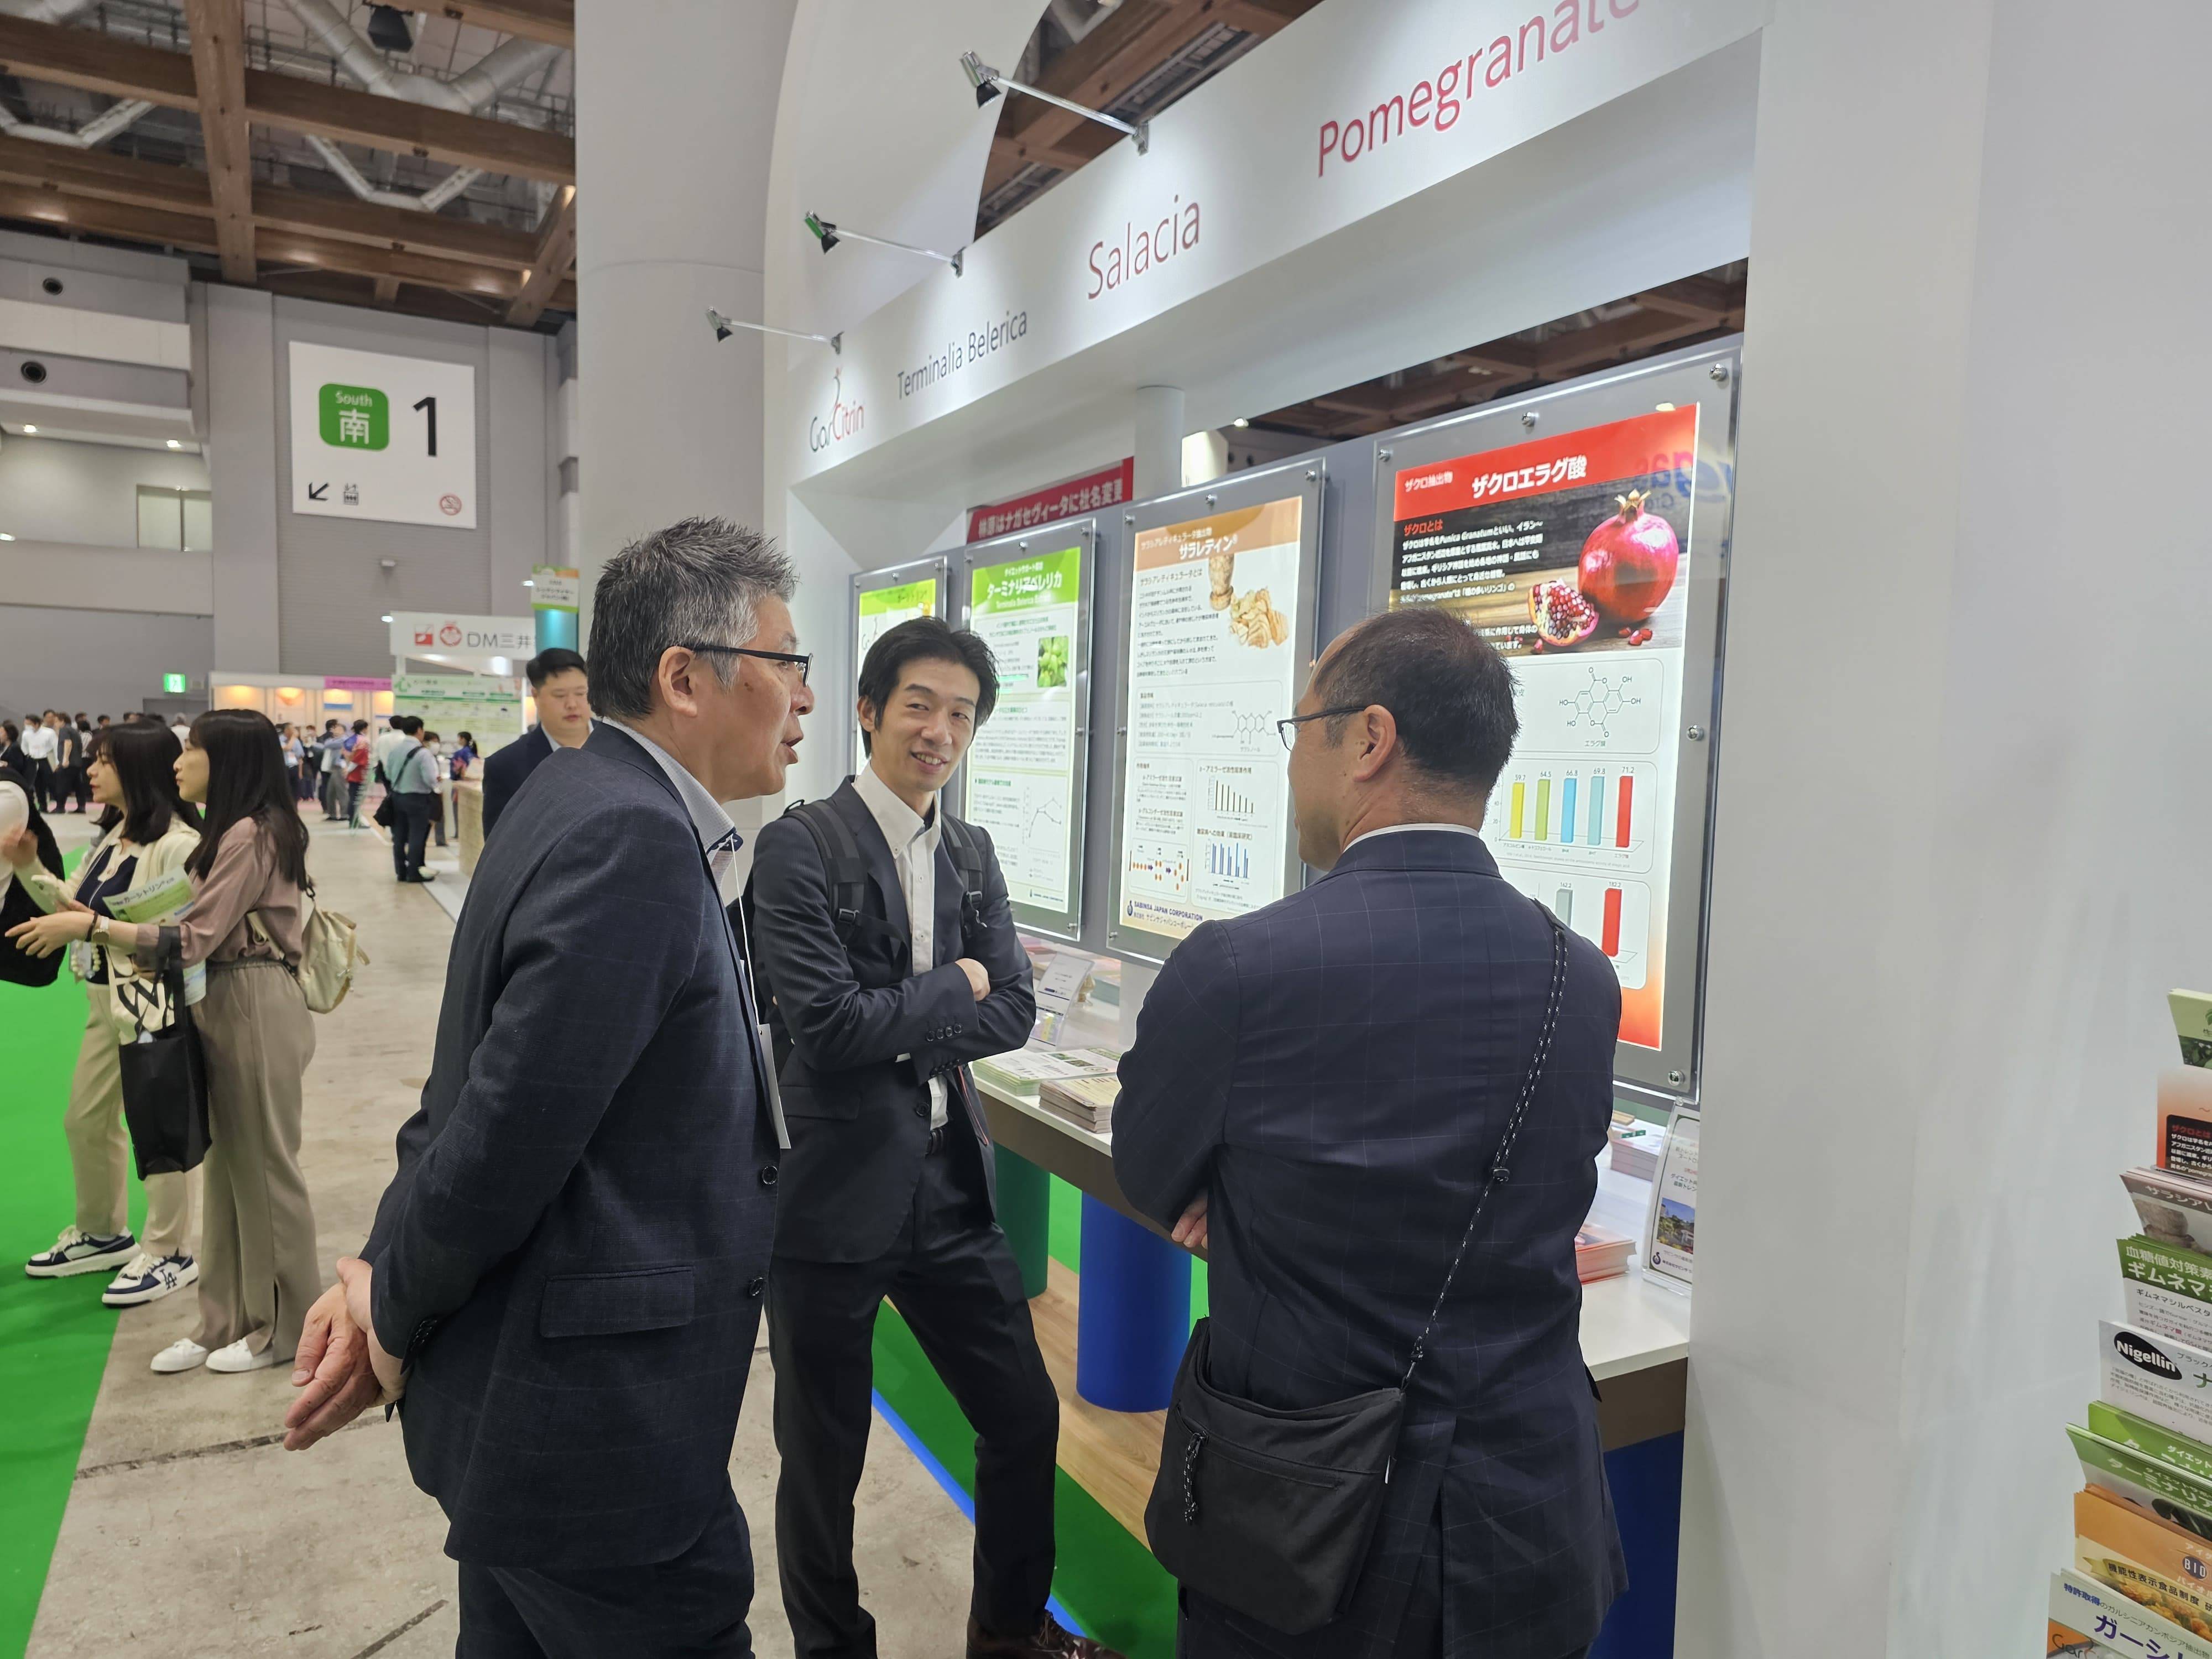 Sami-Sabinsa Showcases Product Range at International Food Ingredients & Additives (IFIA) Japan Expo 2024